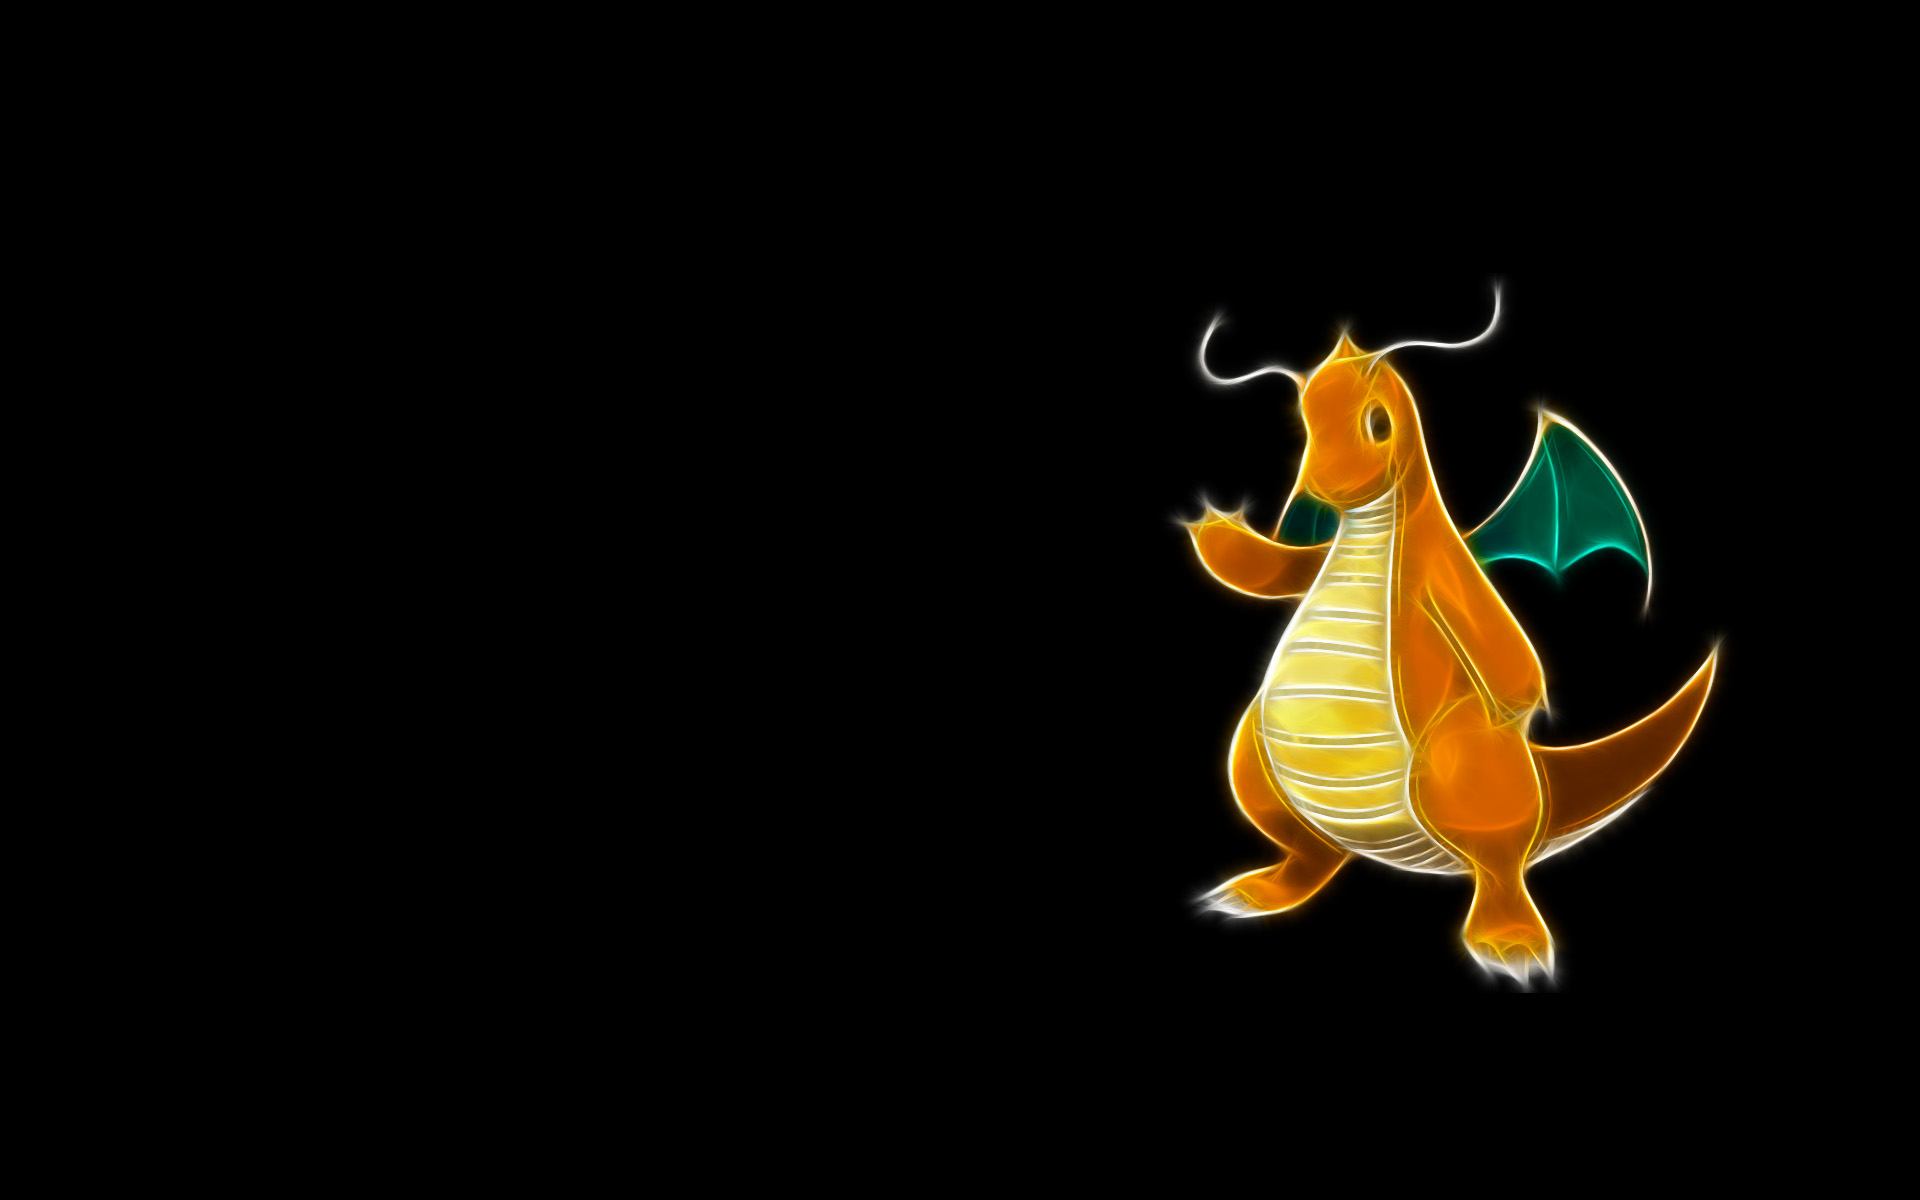 Dragonite  Pokemon Desktop Wallpaper by Jotasso on DeviantArt